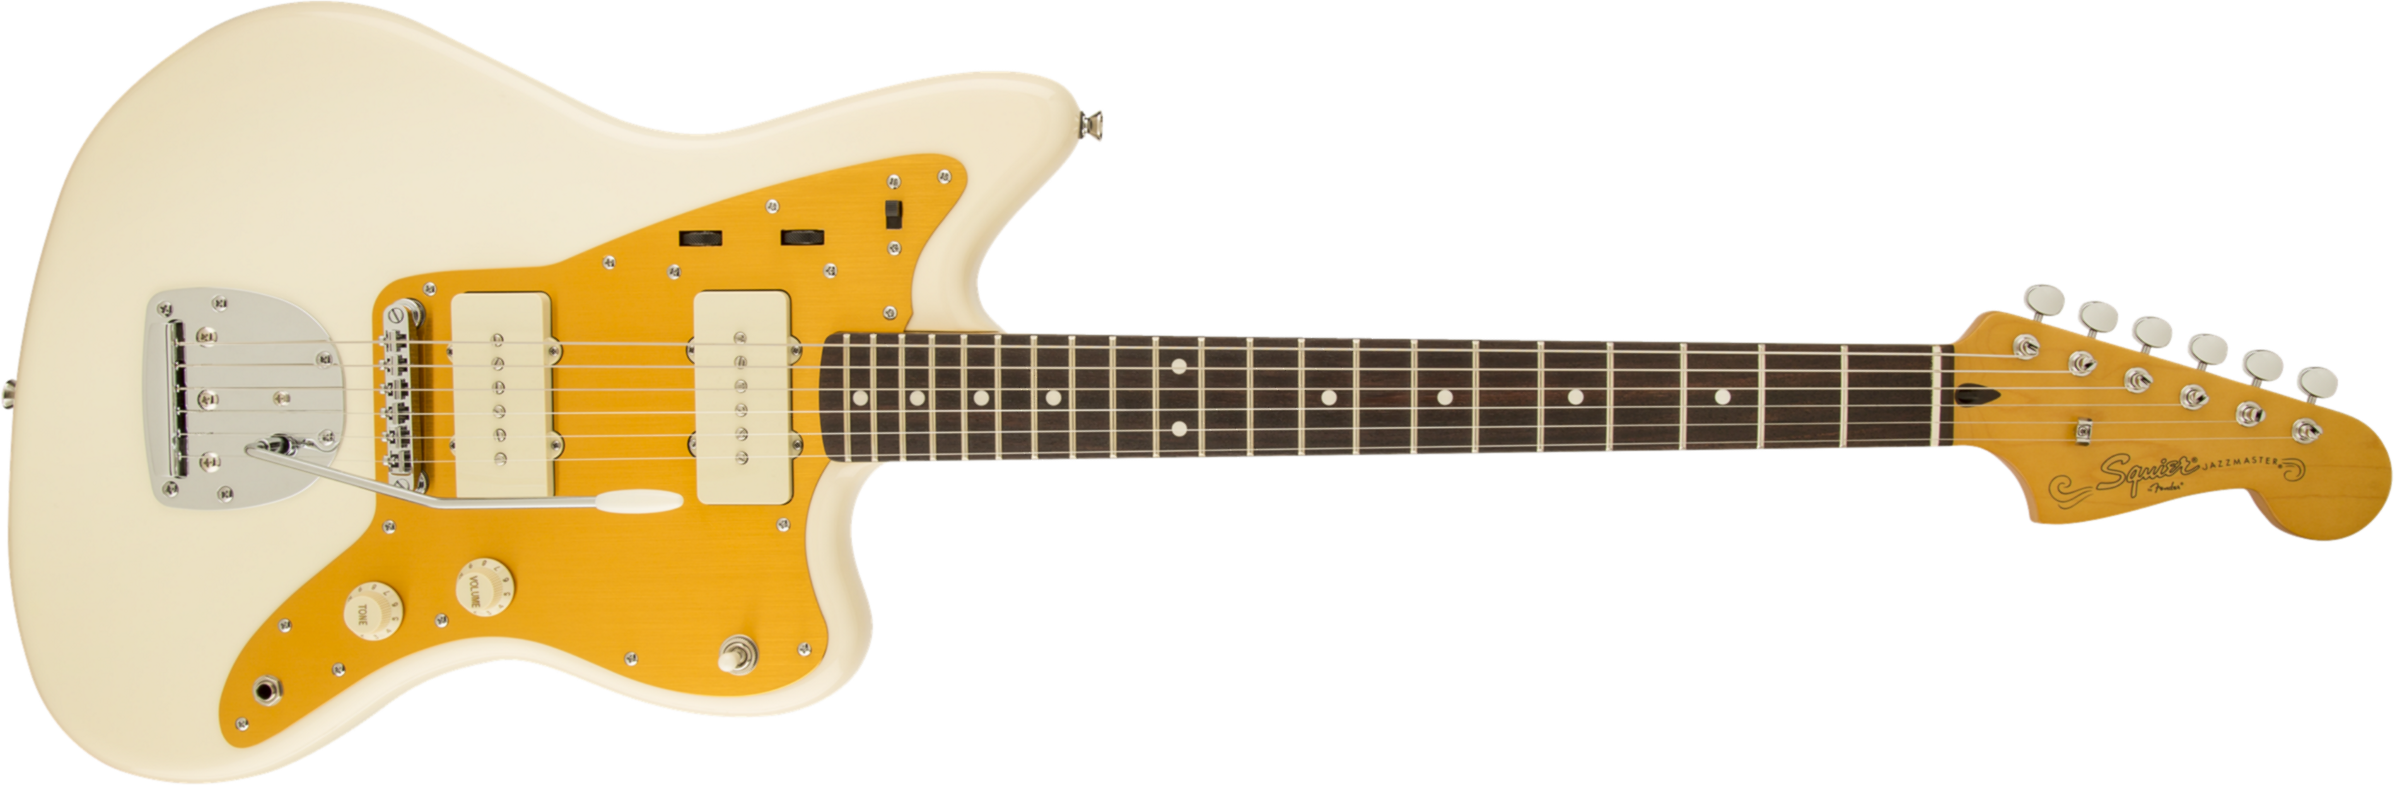 Squier Jazzmaster J Mascis (lau) - Vintage White - Retro rock electric guitar - Main picture